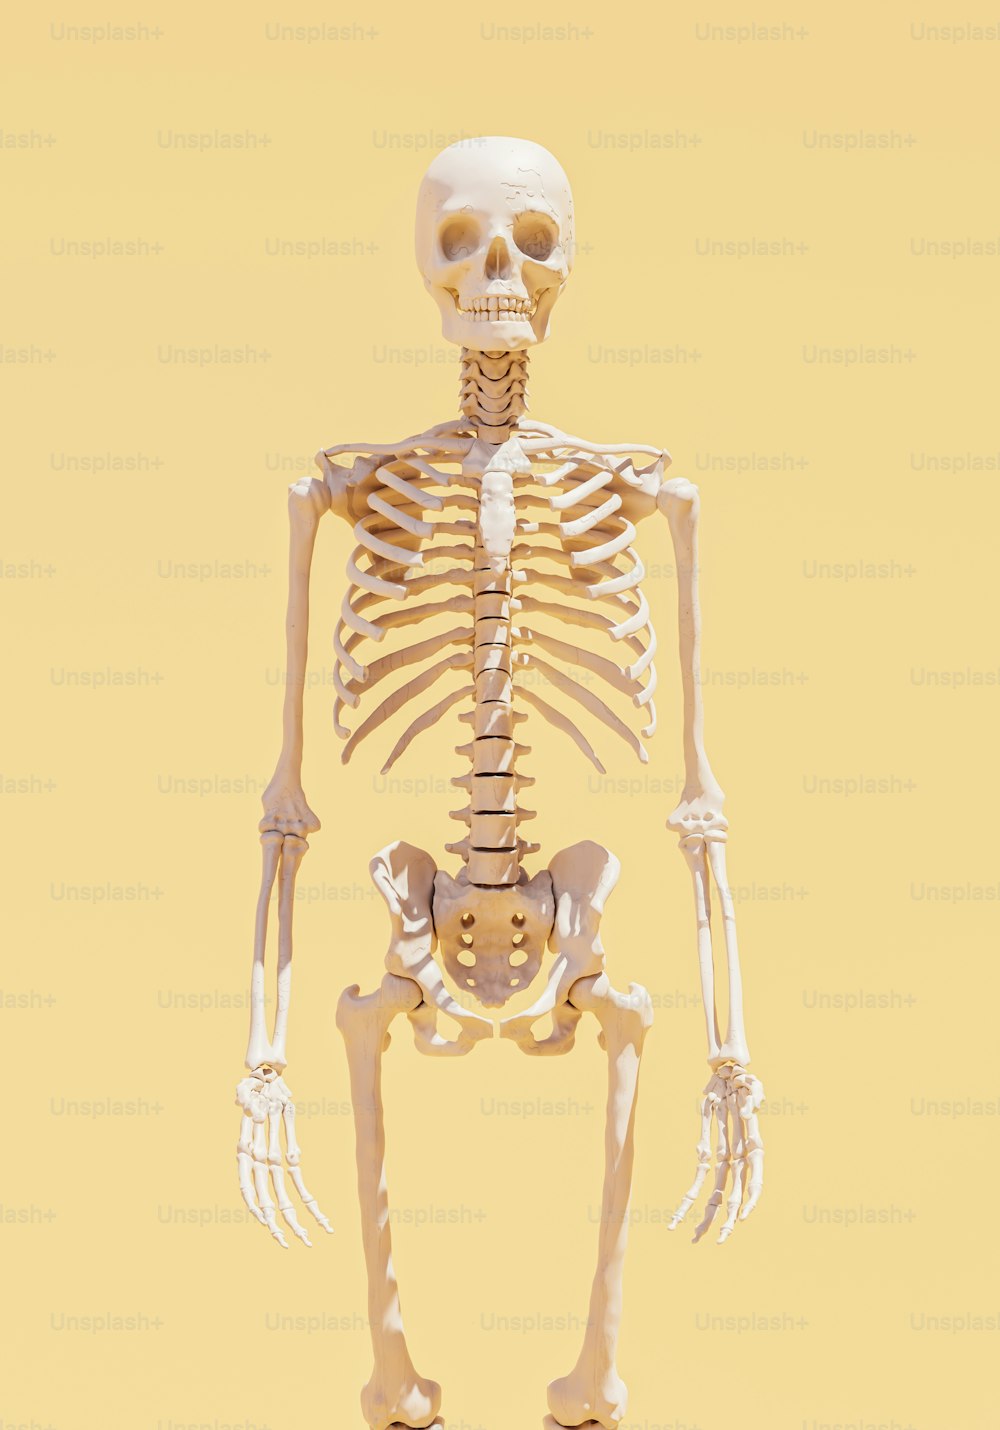 Un esqueleto está parado en medio de un fondo amarillo